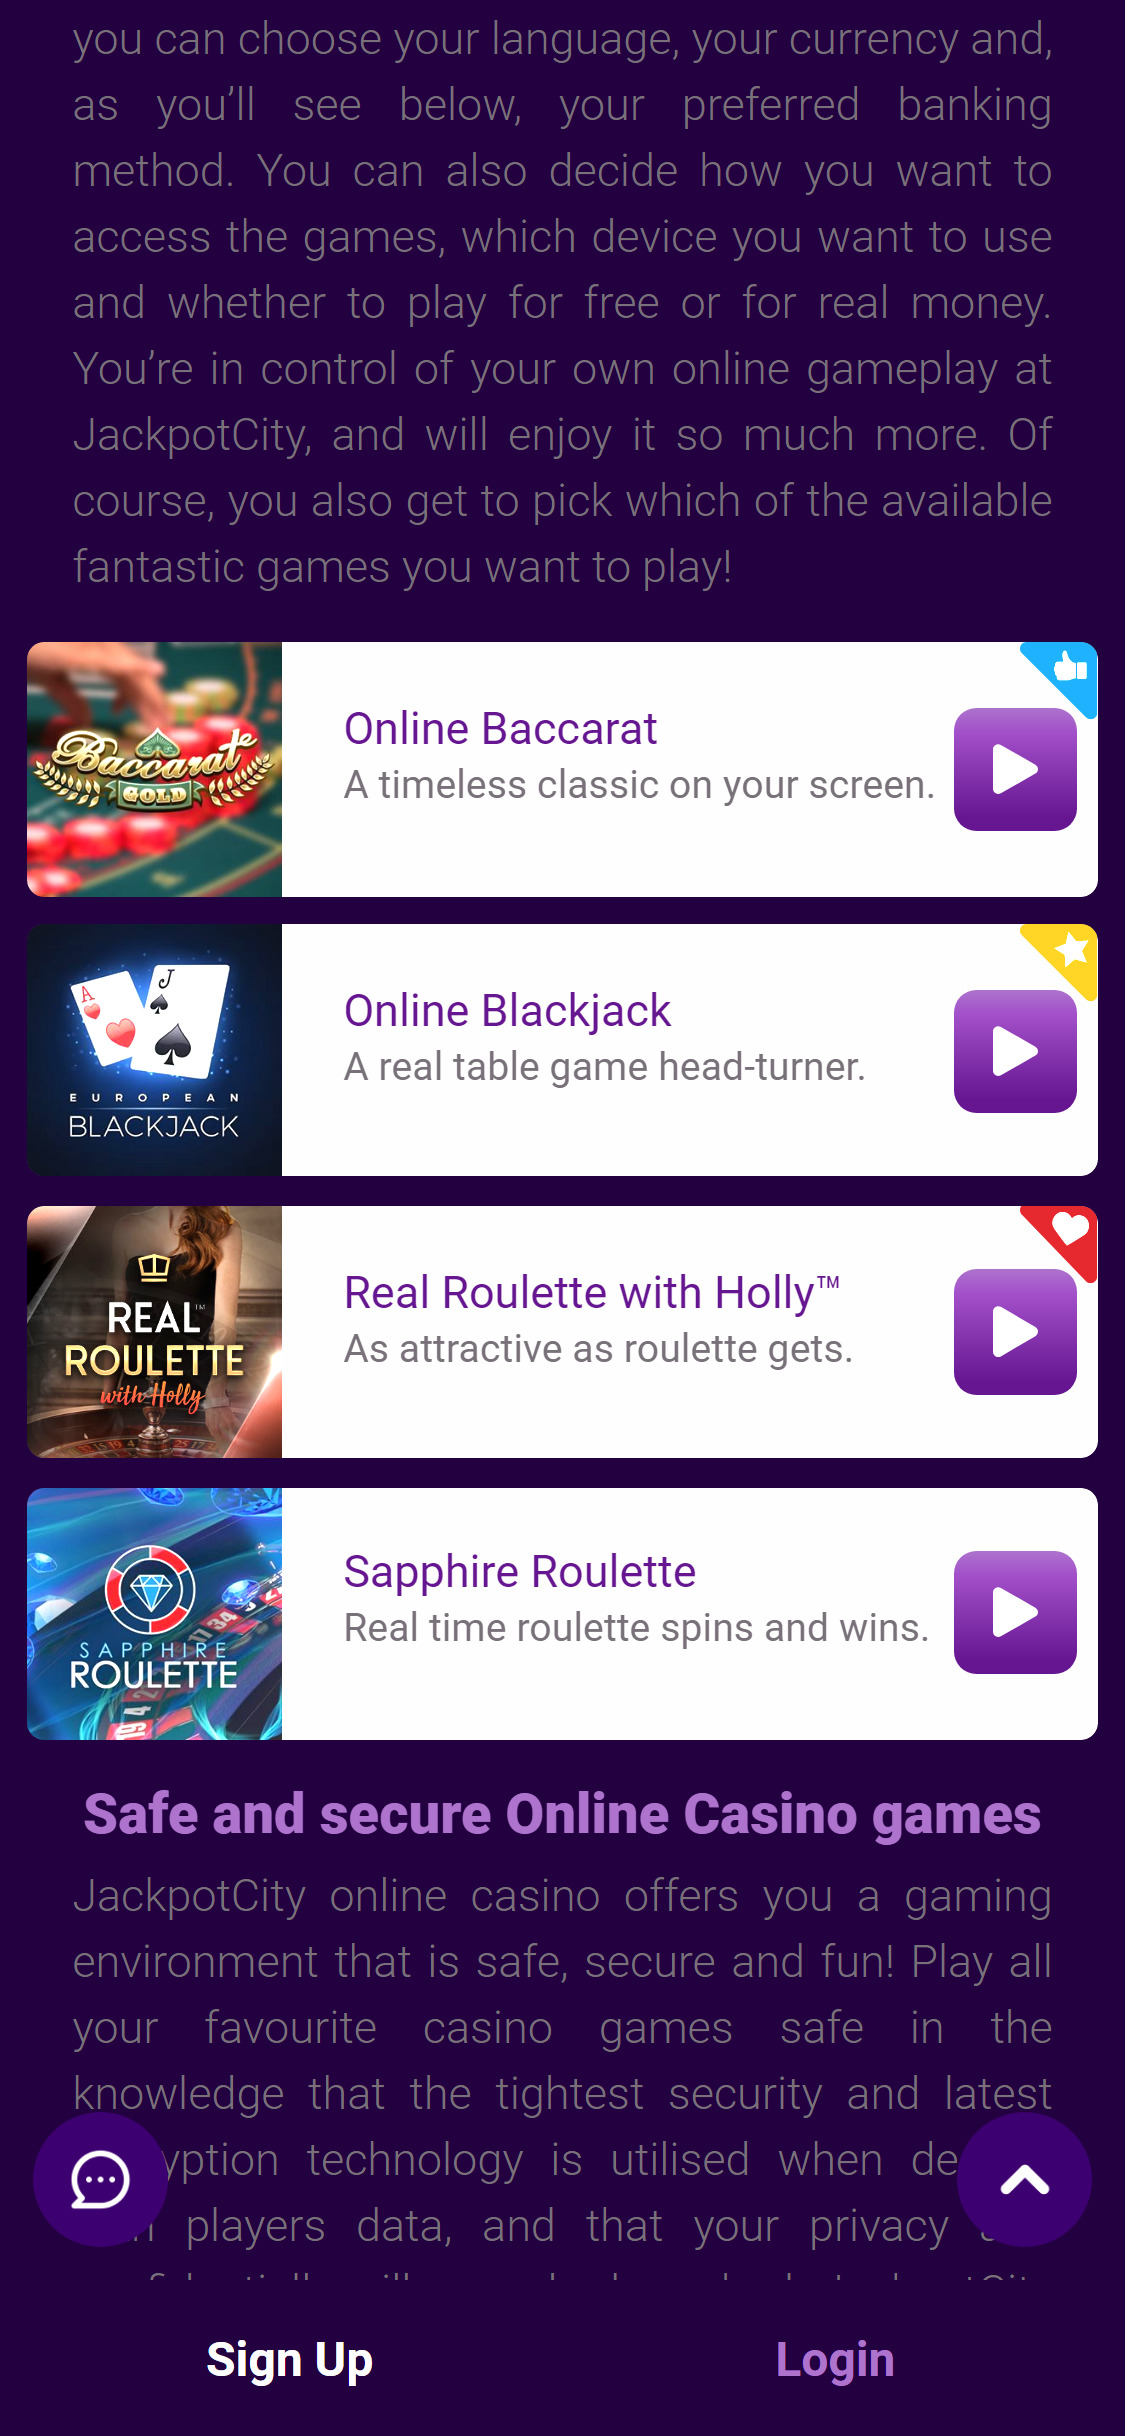 JackpotCity Casino Mobile Games Review